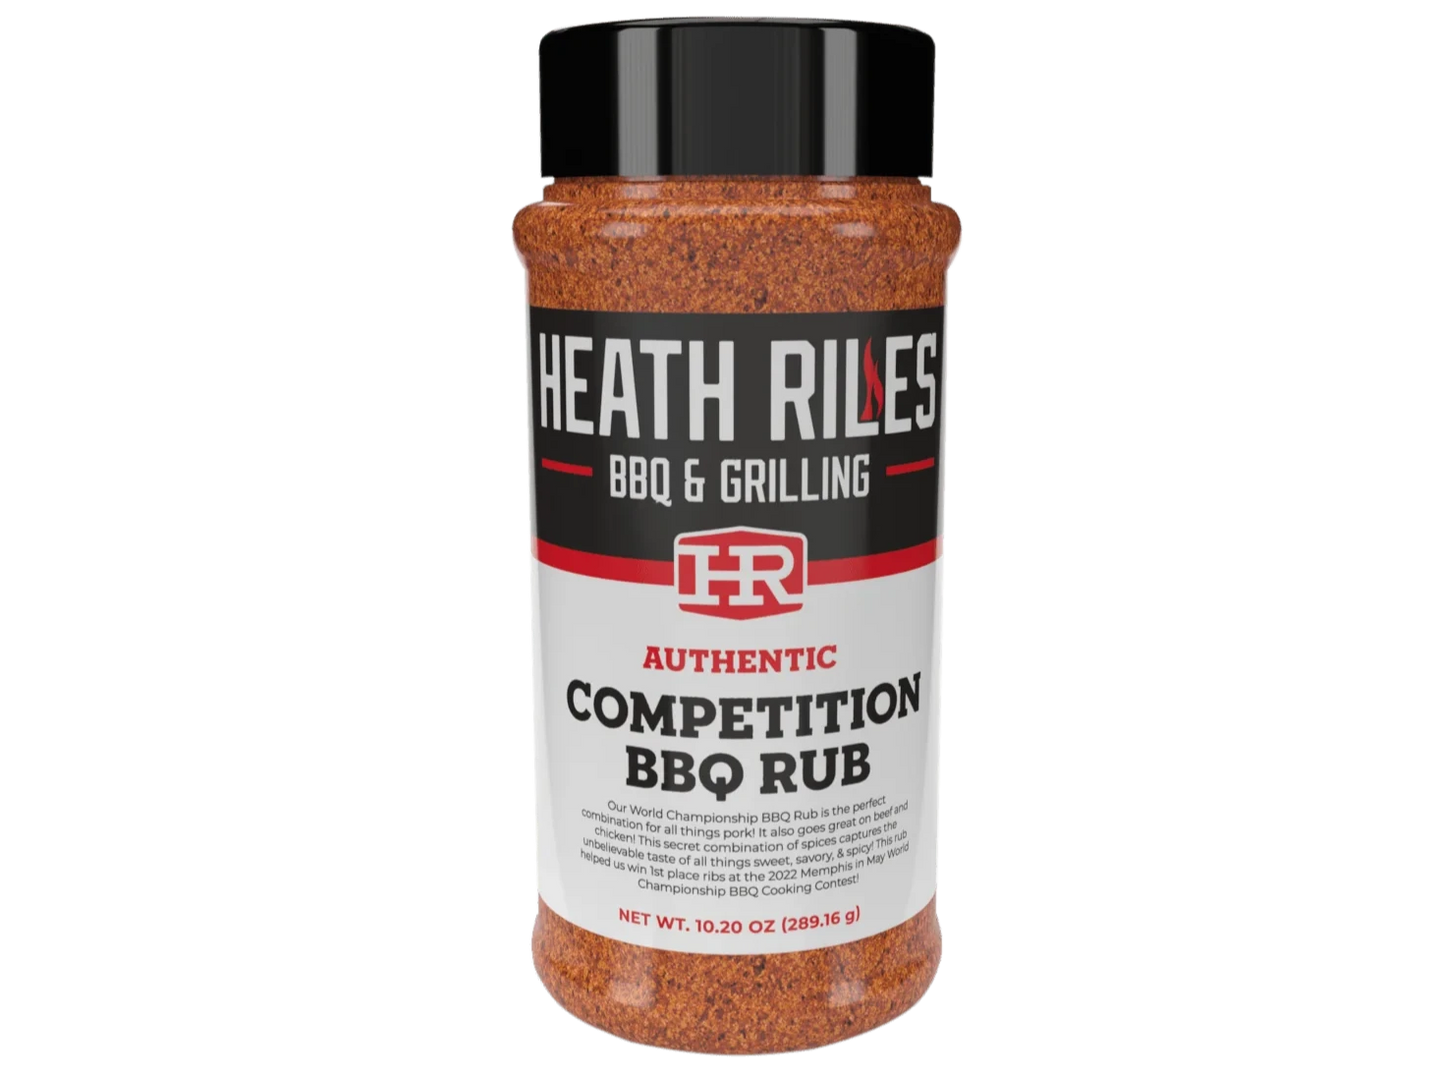 Heath Riles Competetion Rub